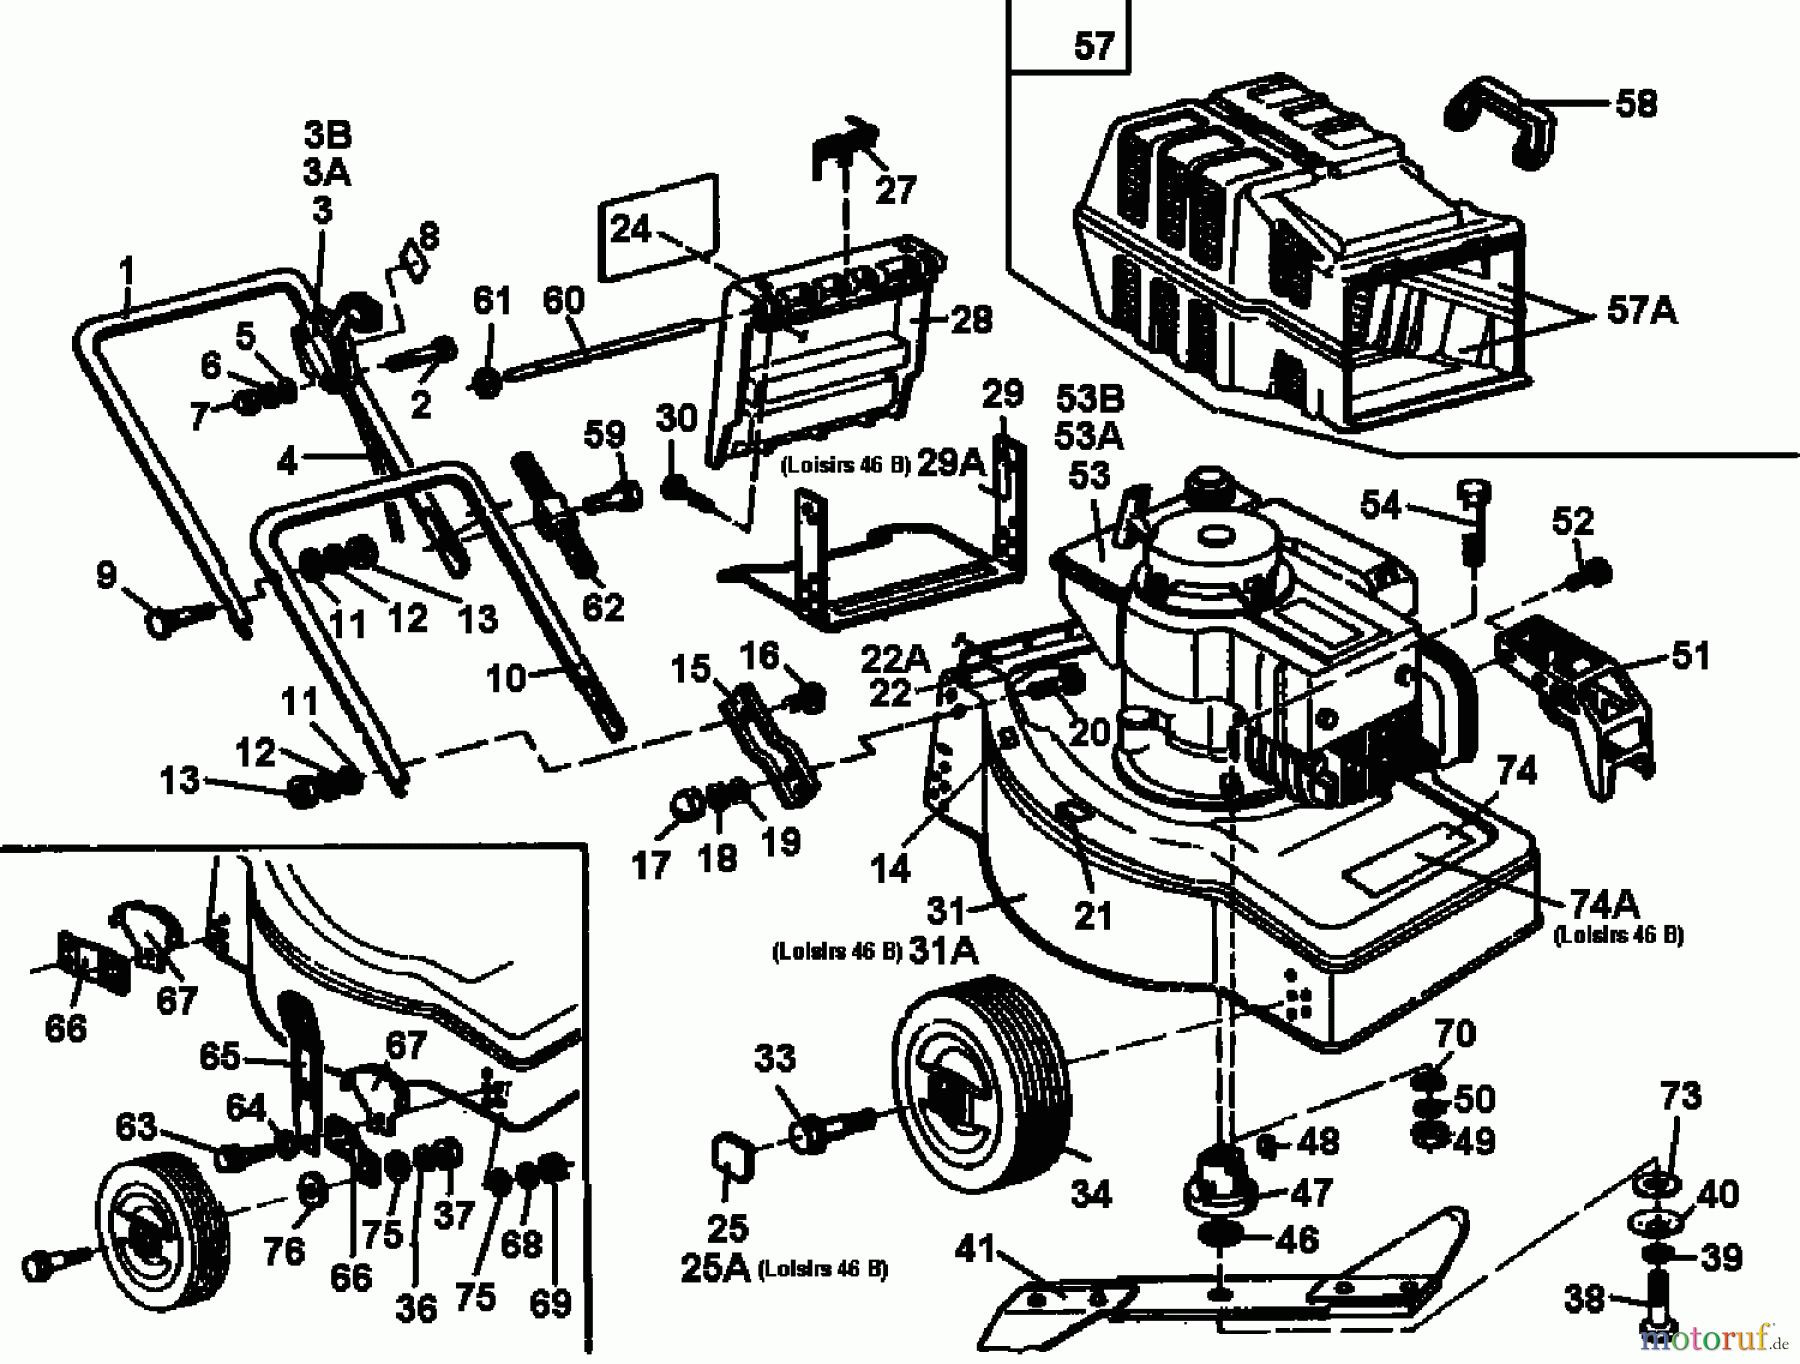  Diana Petrol mower 45 B 02813.01  (1992) Basic machine